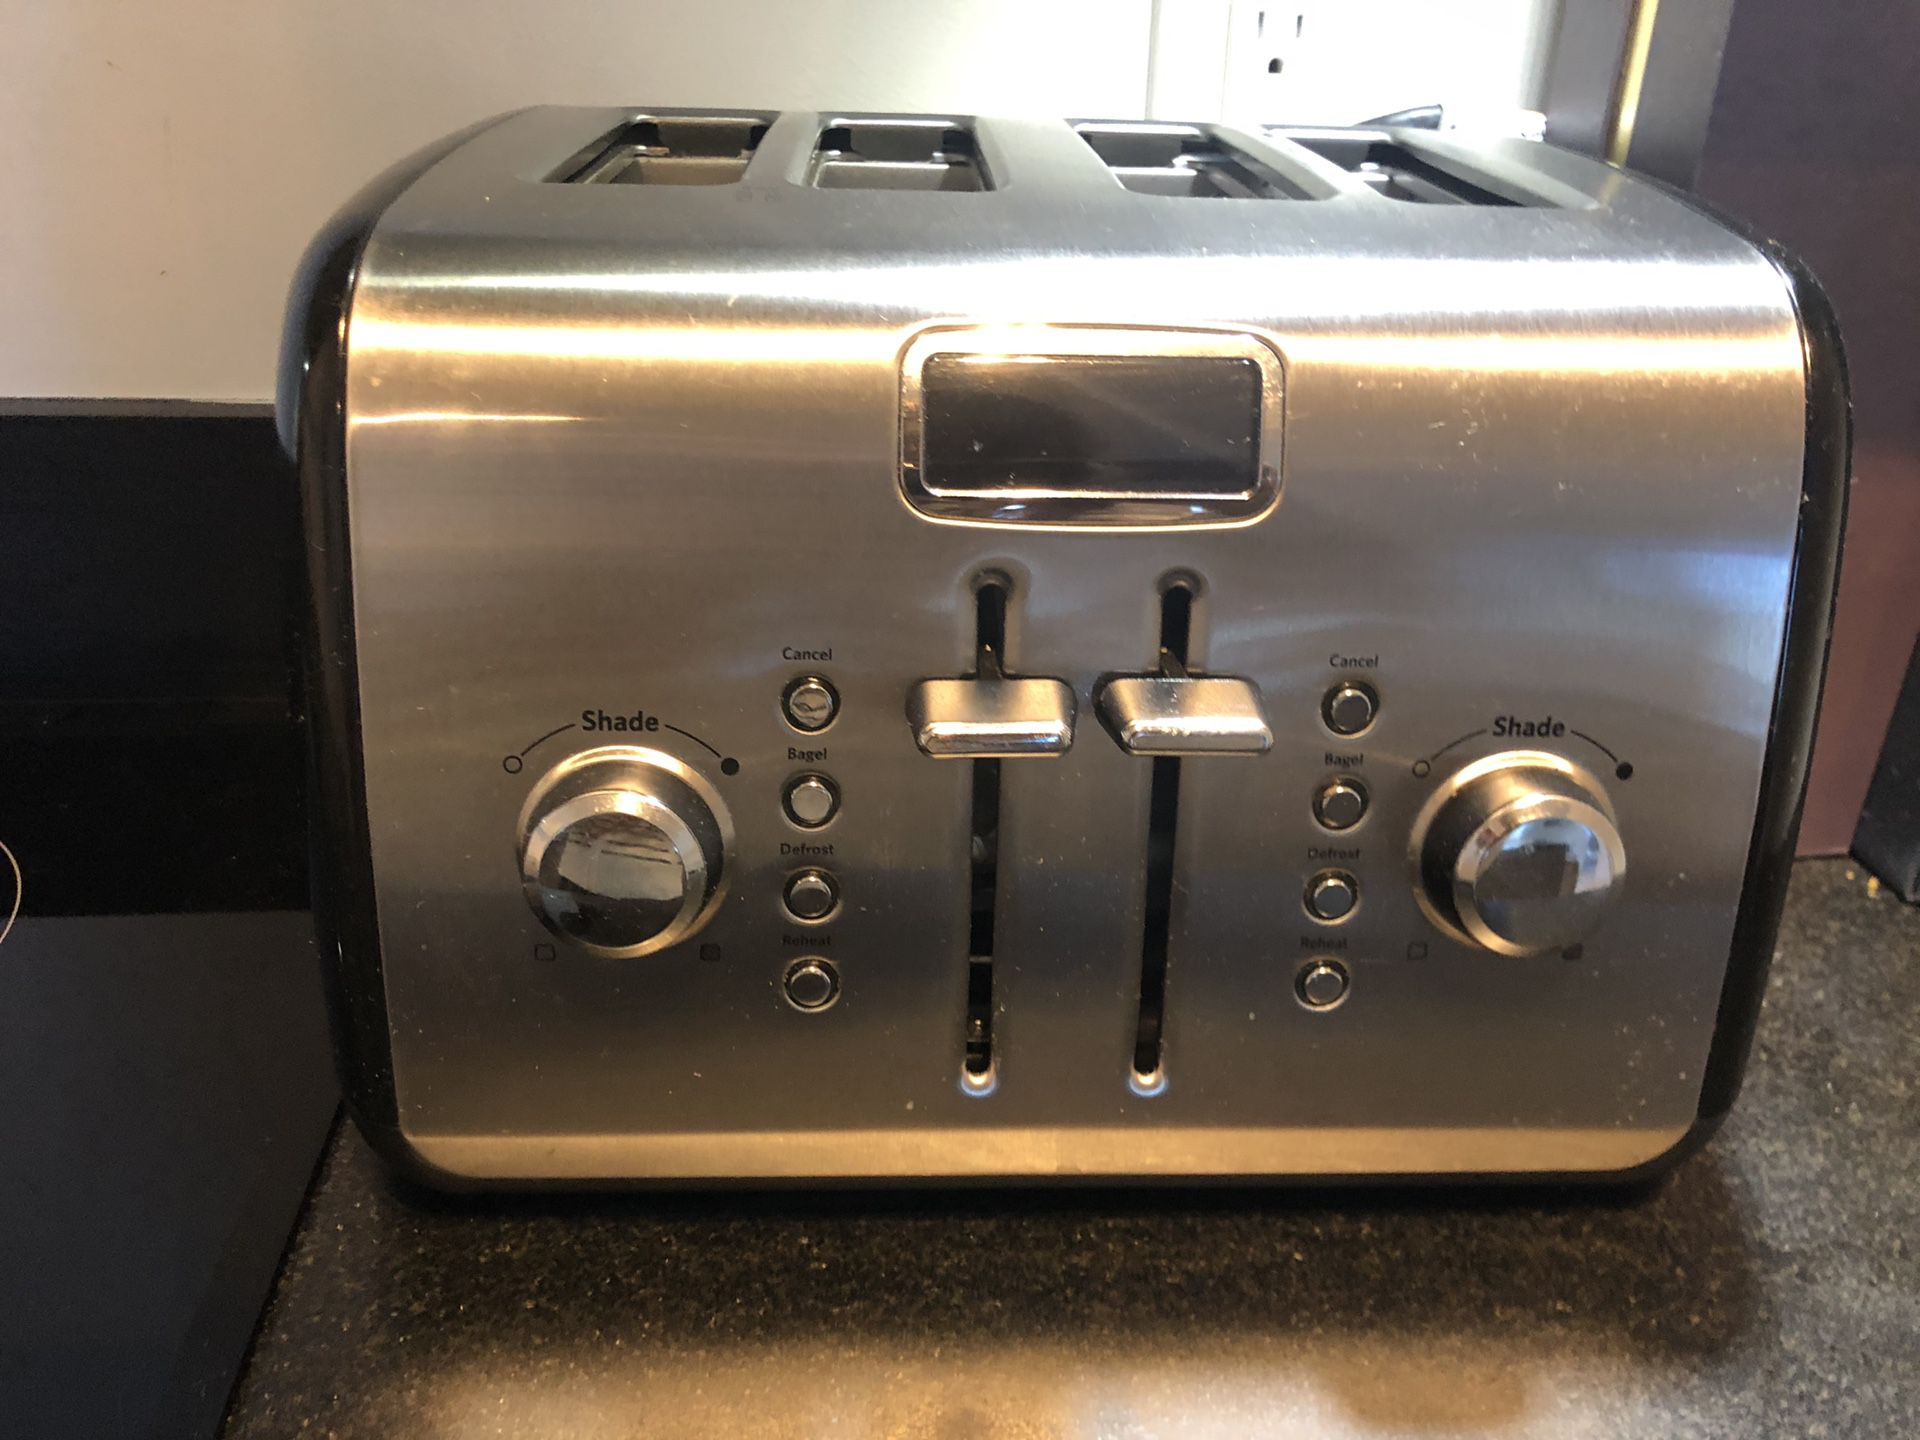 KitchenAid 4 slice toaster